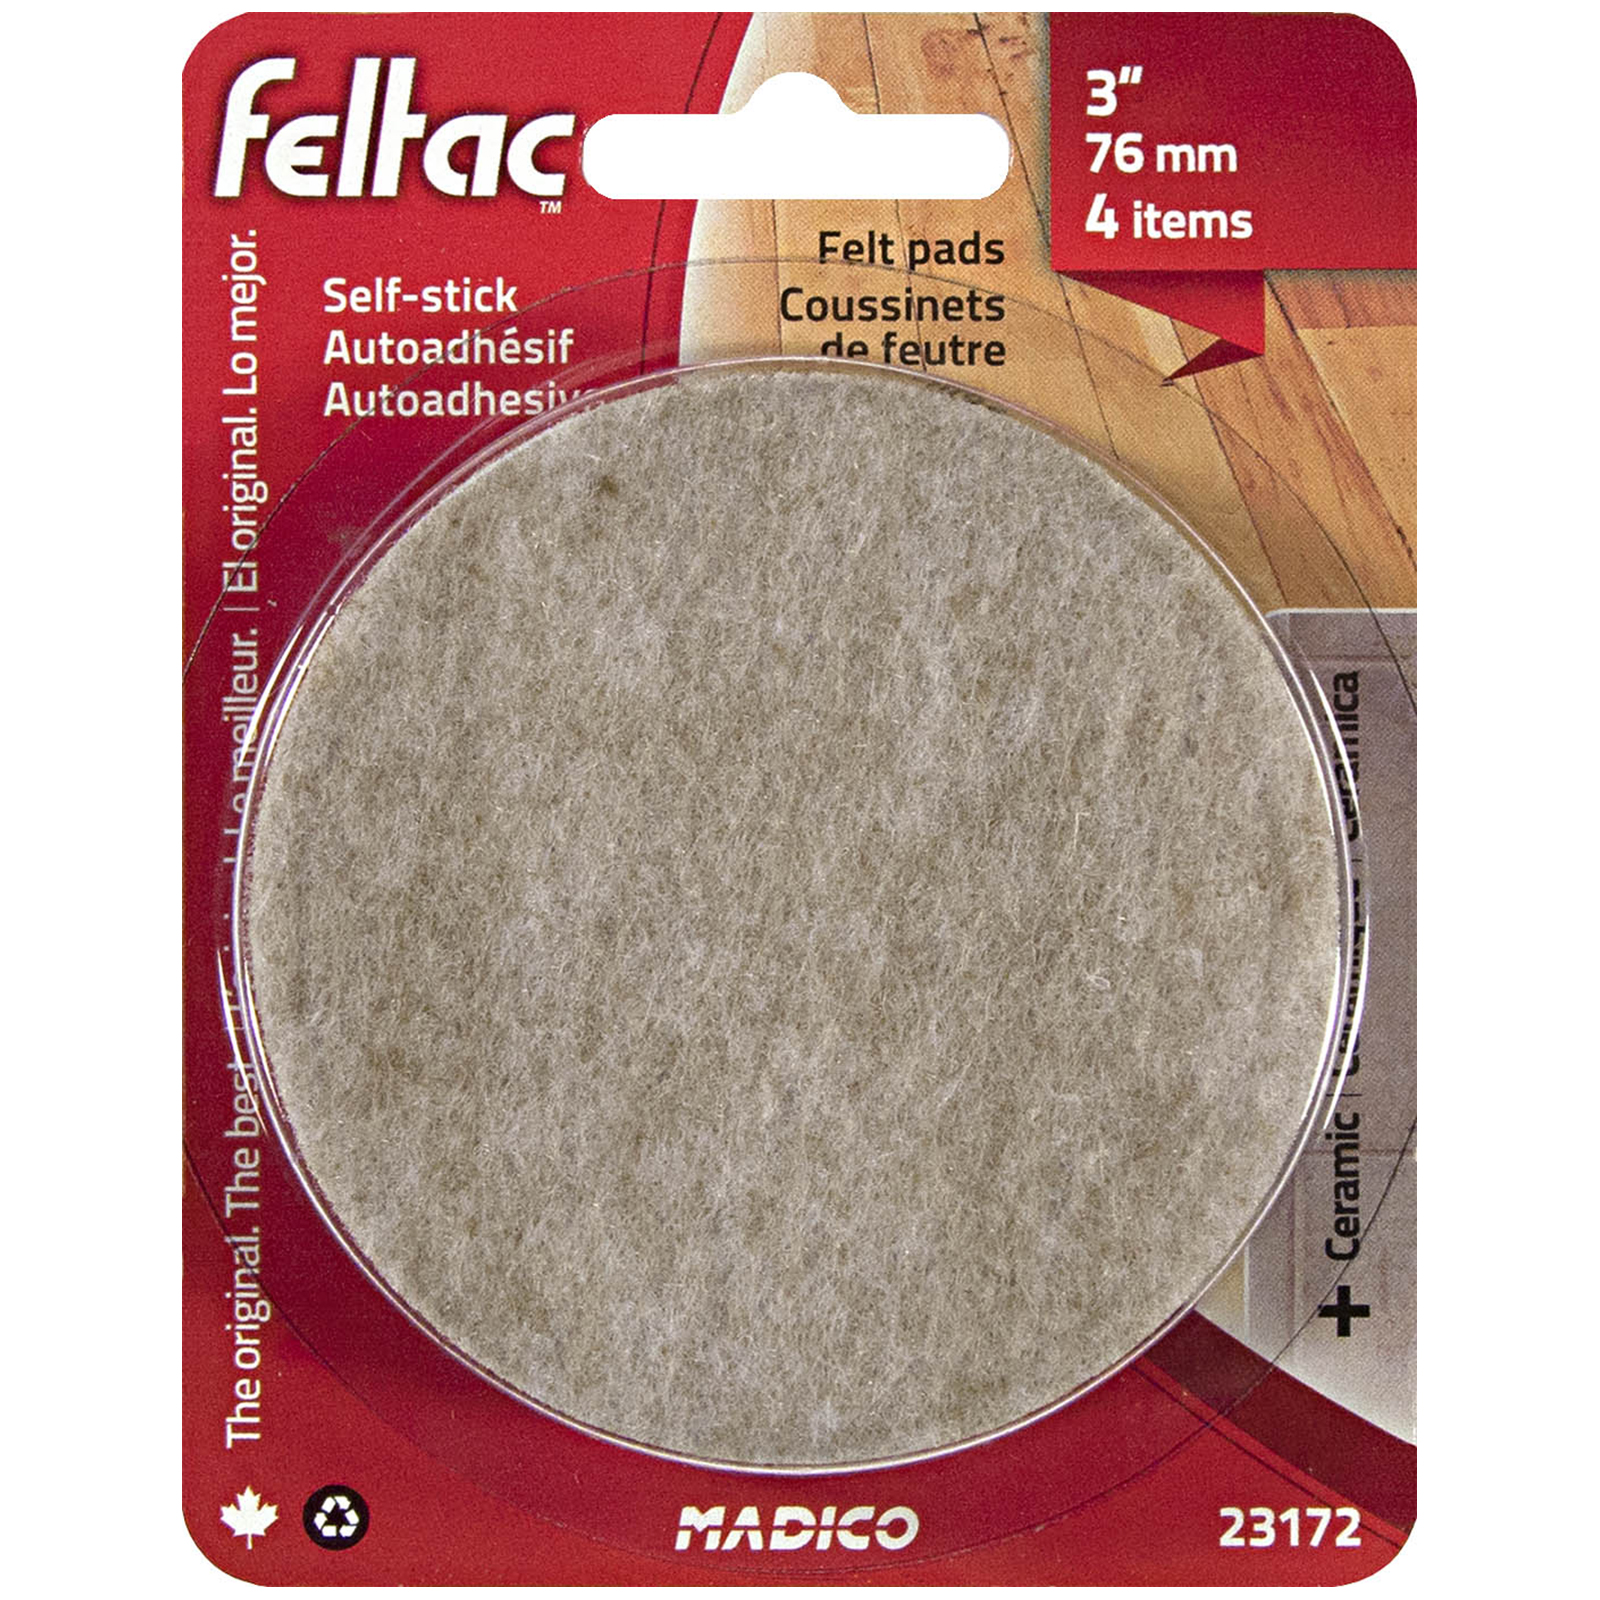 Madico 76mm Beige Round Feltac Floor Protection Pad - 4 Pack